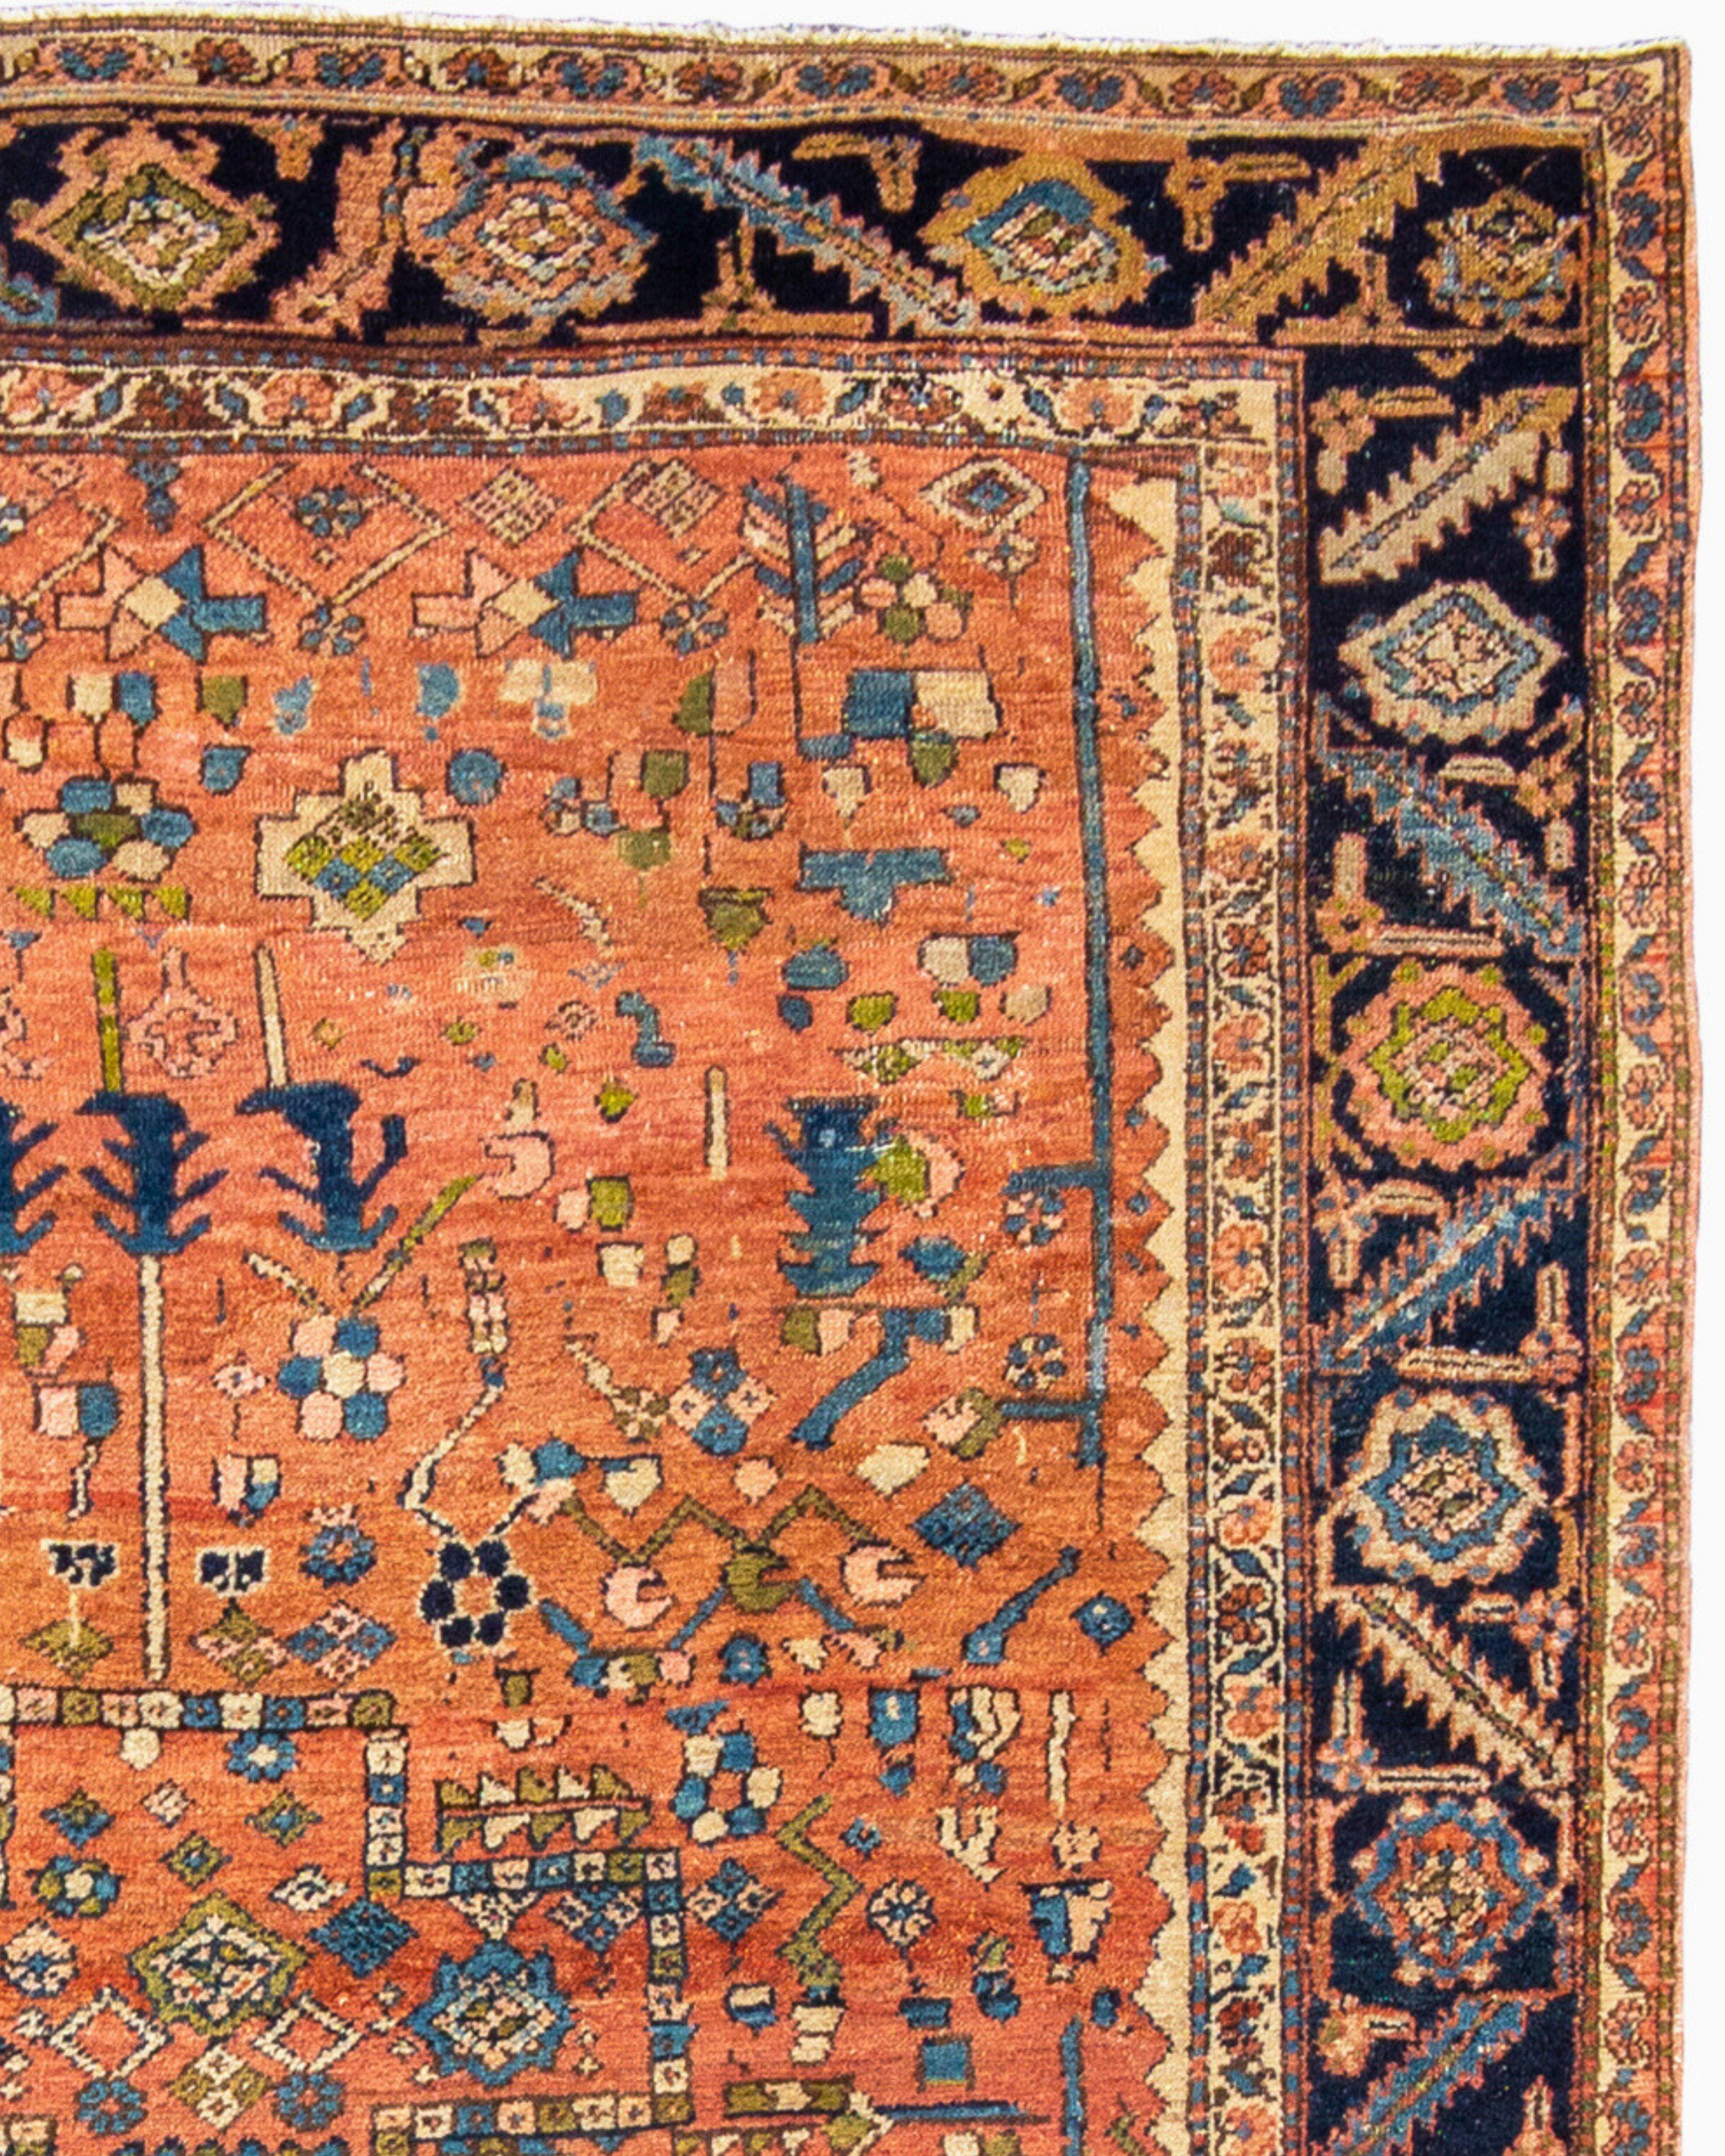 Antique Persian Bakhshaish Carpet, c. 1900

Additional Information:
Dimensions: 8'8